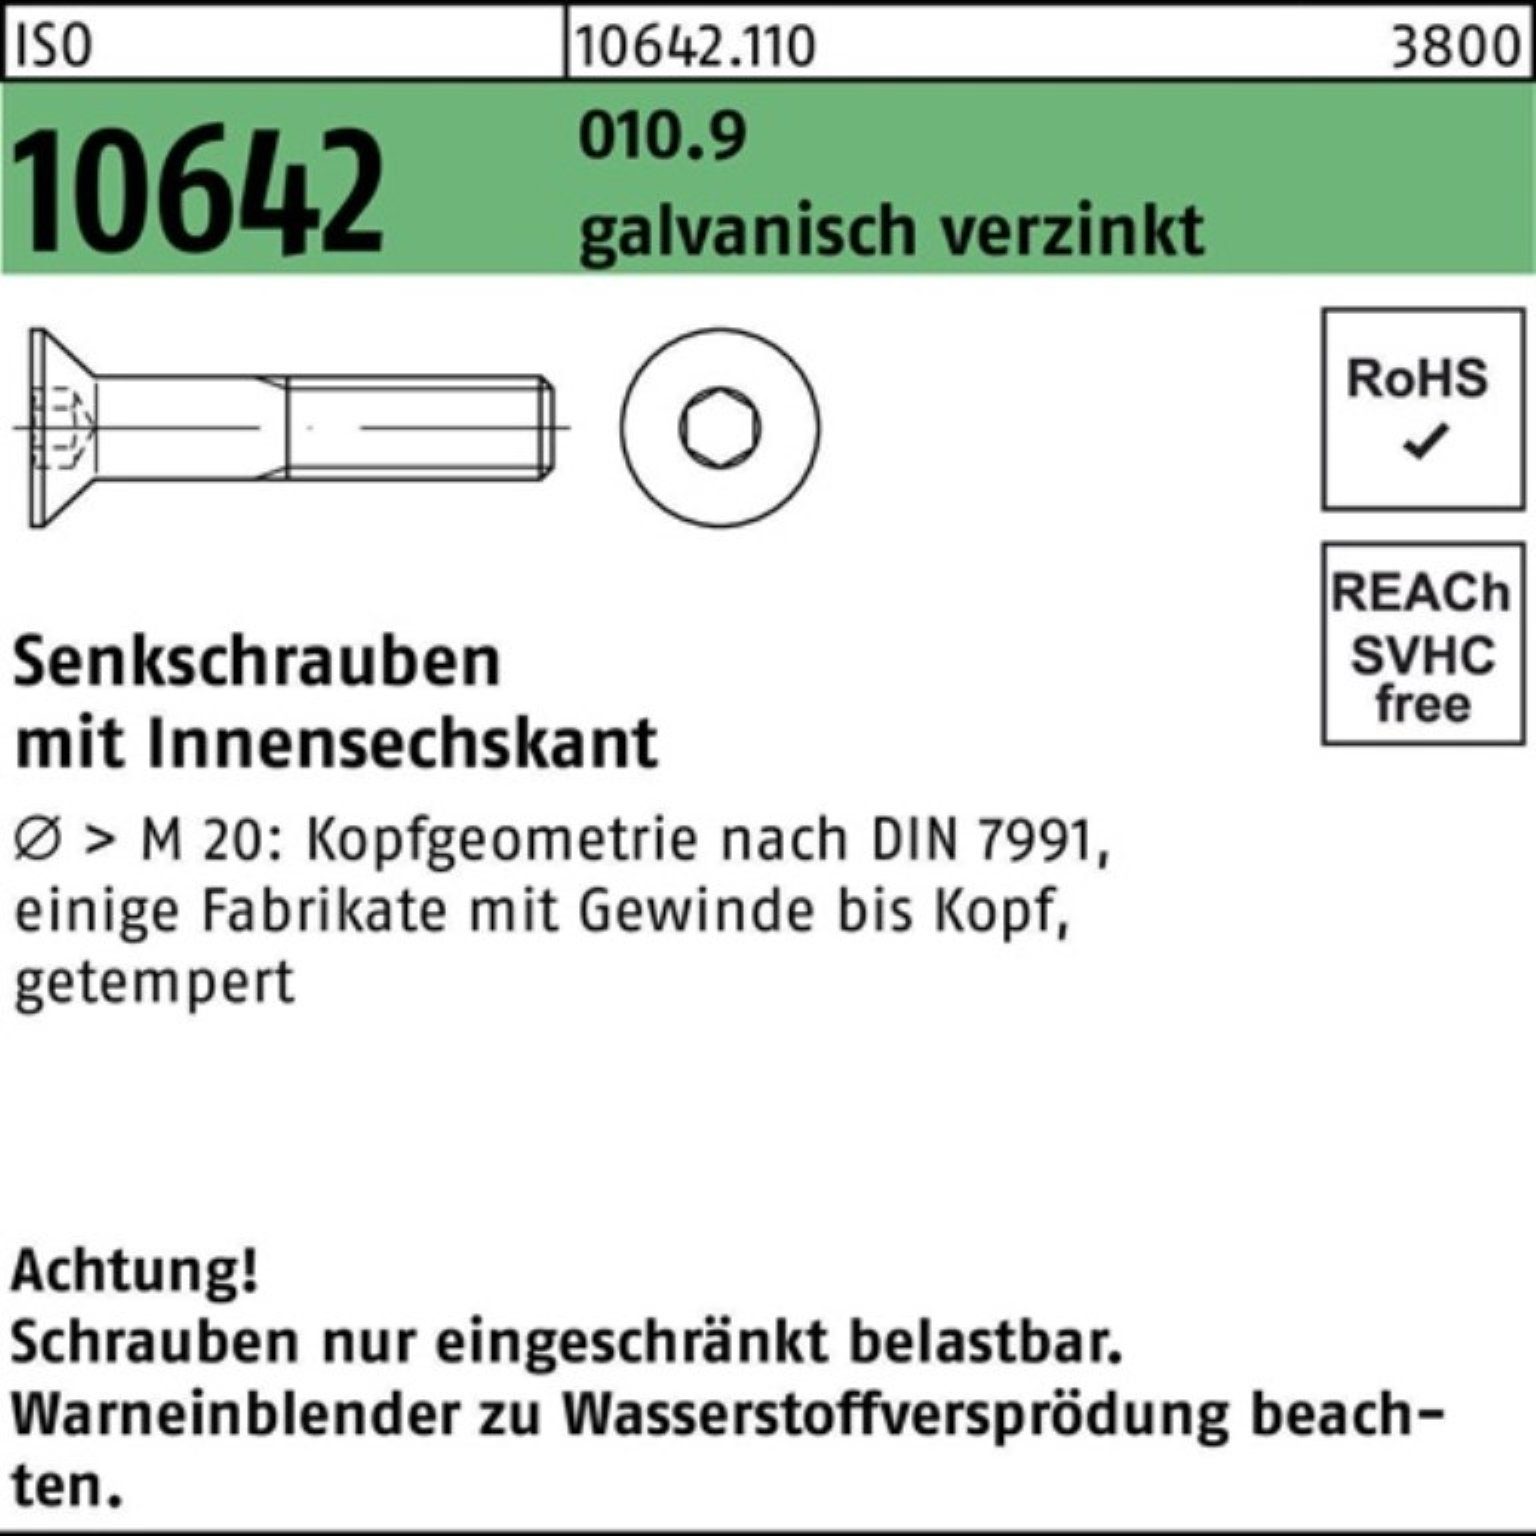 Senkschraube Pack Senkschraube M12x 5 10642 010.9 70 ISO Reyher Innen-6kt galv.verz. 100er